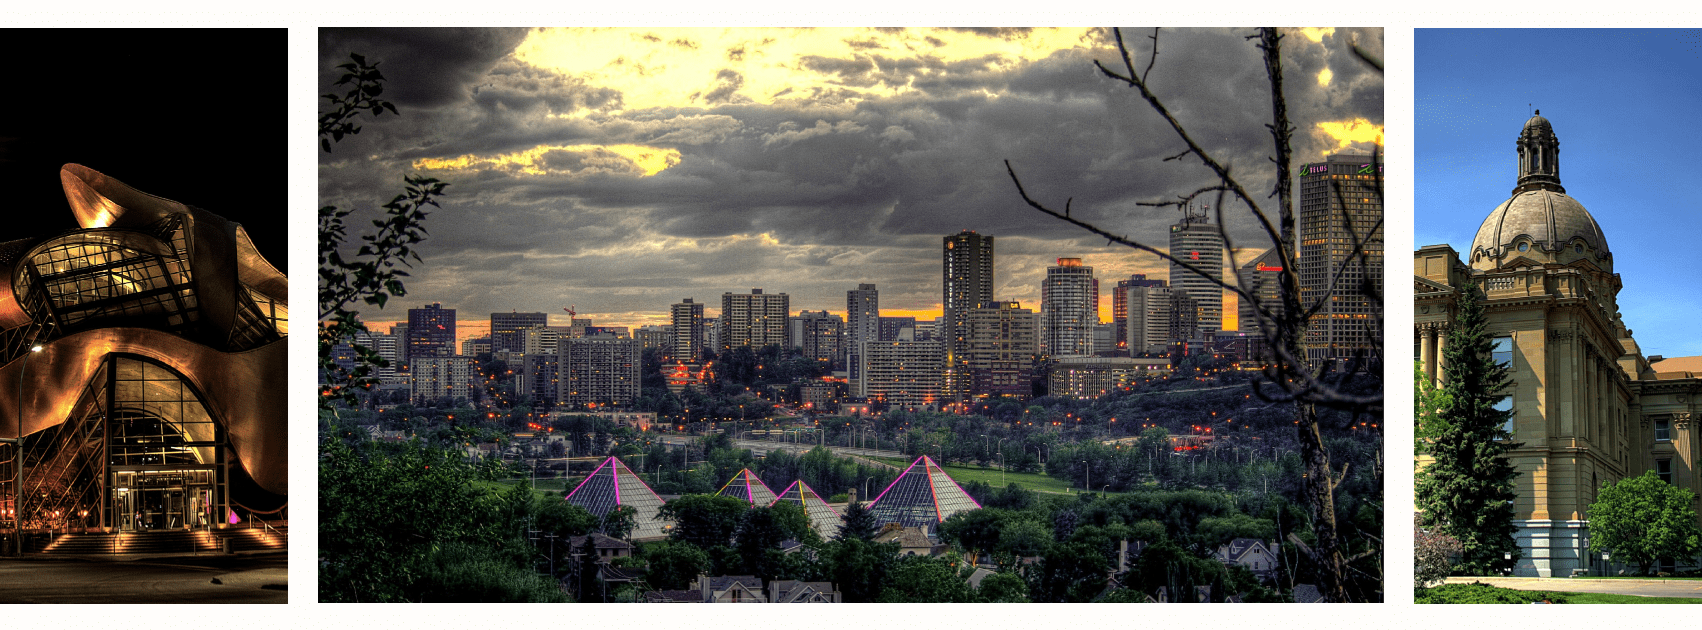 Edmonton hotspot for Airbnb and short-term rentals